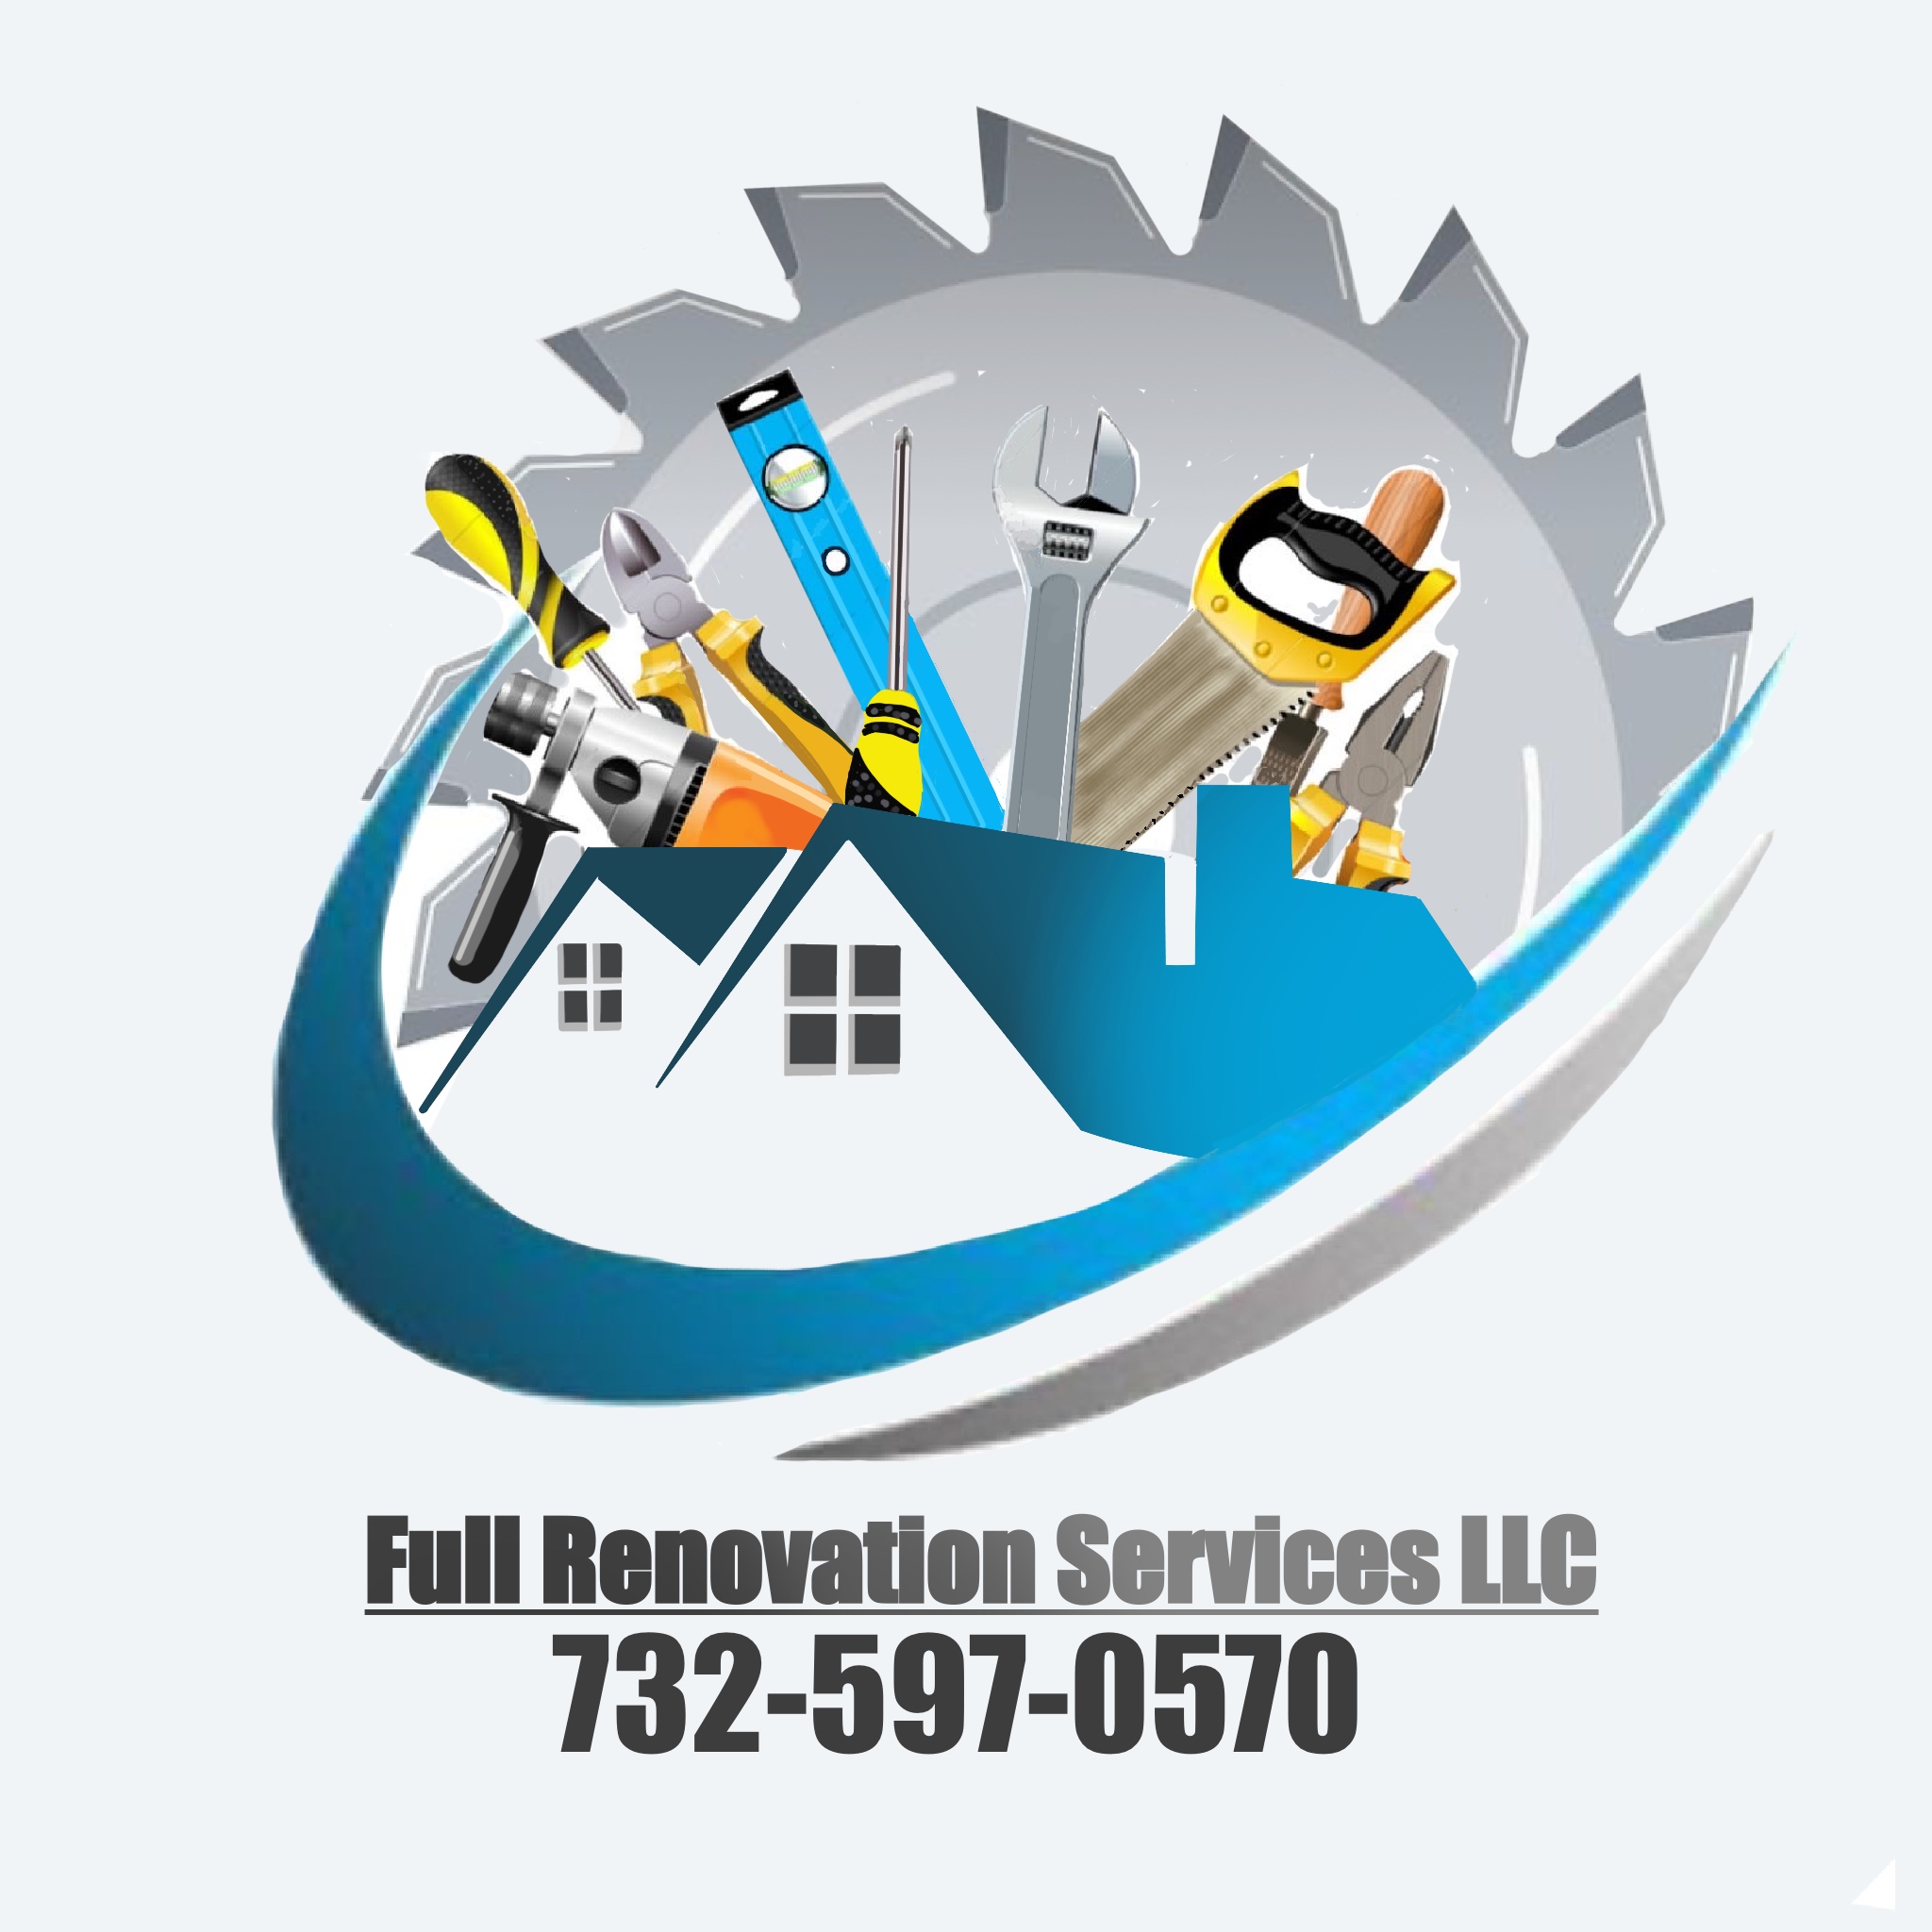 Full Renovation Services LLC